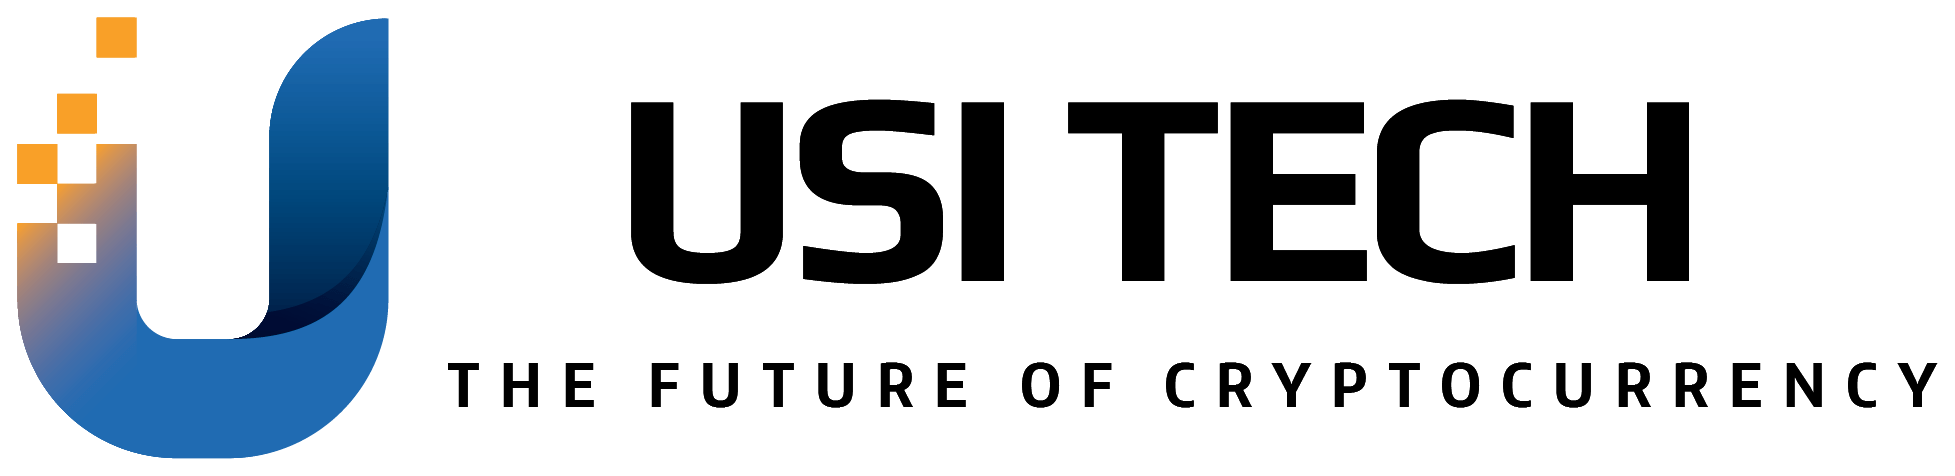 USI Tech logo